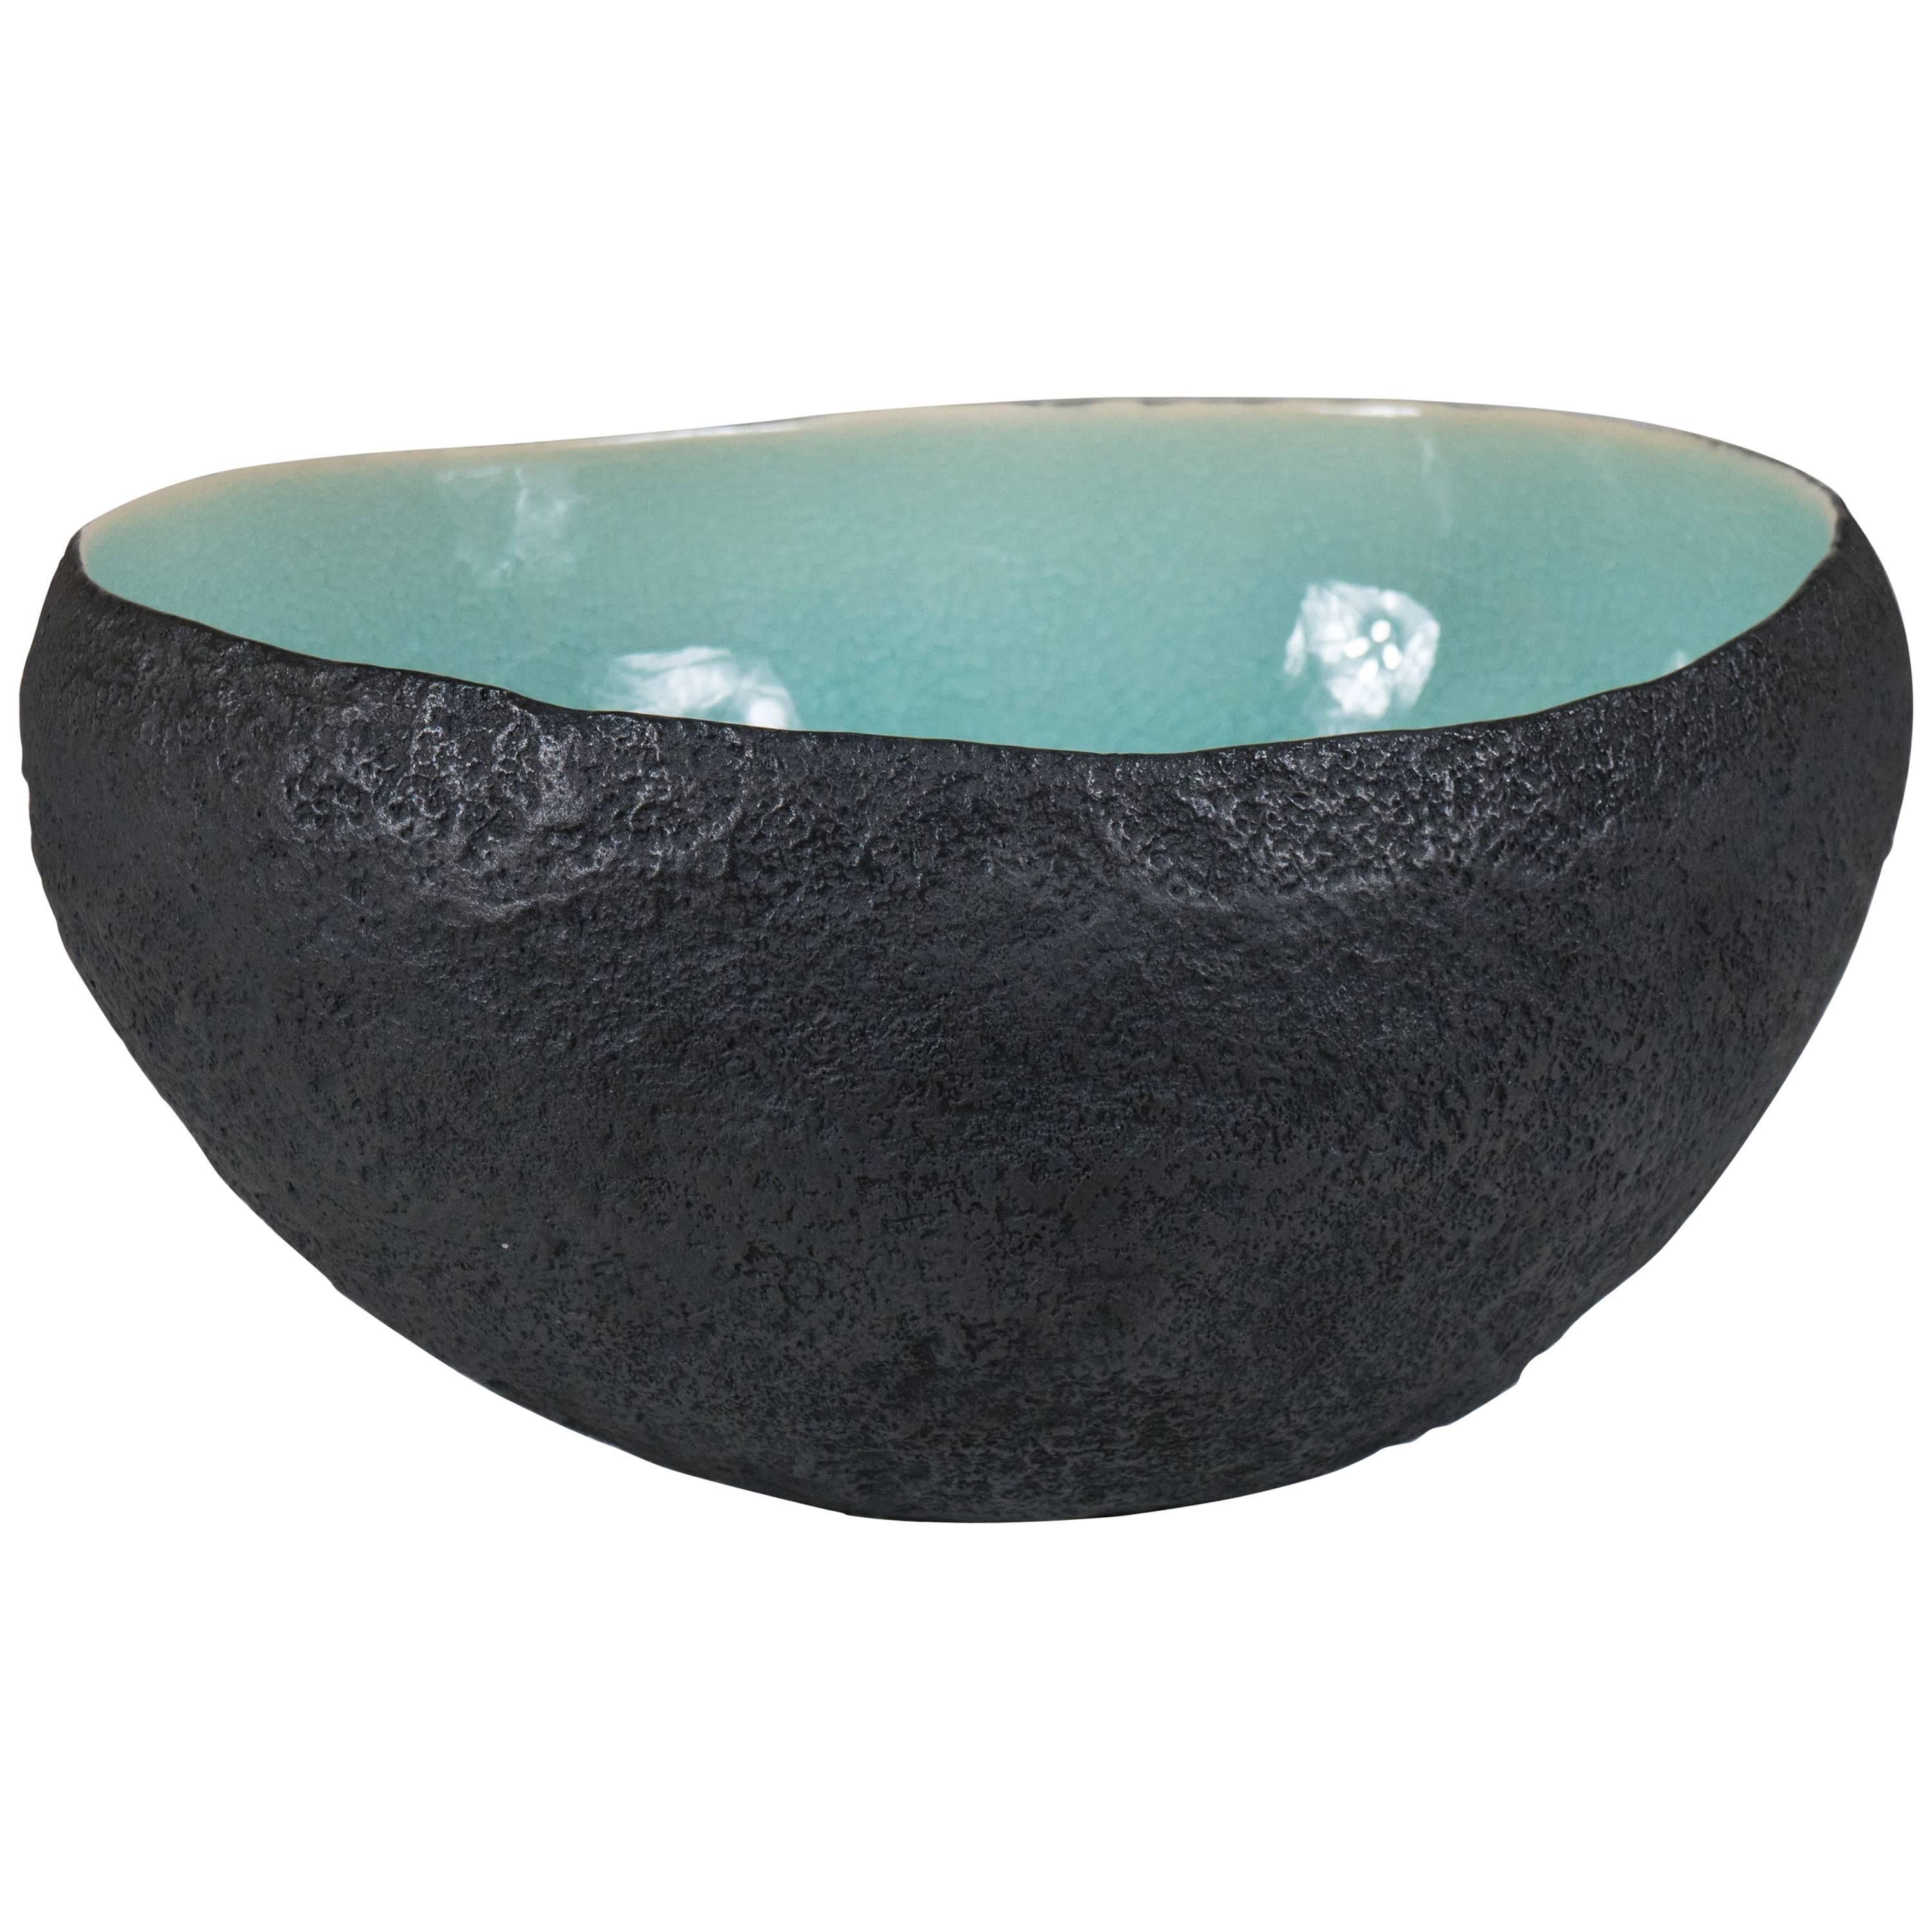 Ceramic Bowl Centerpiece by Cristina Salusti